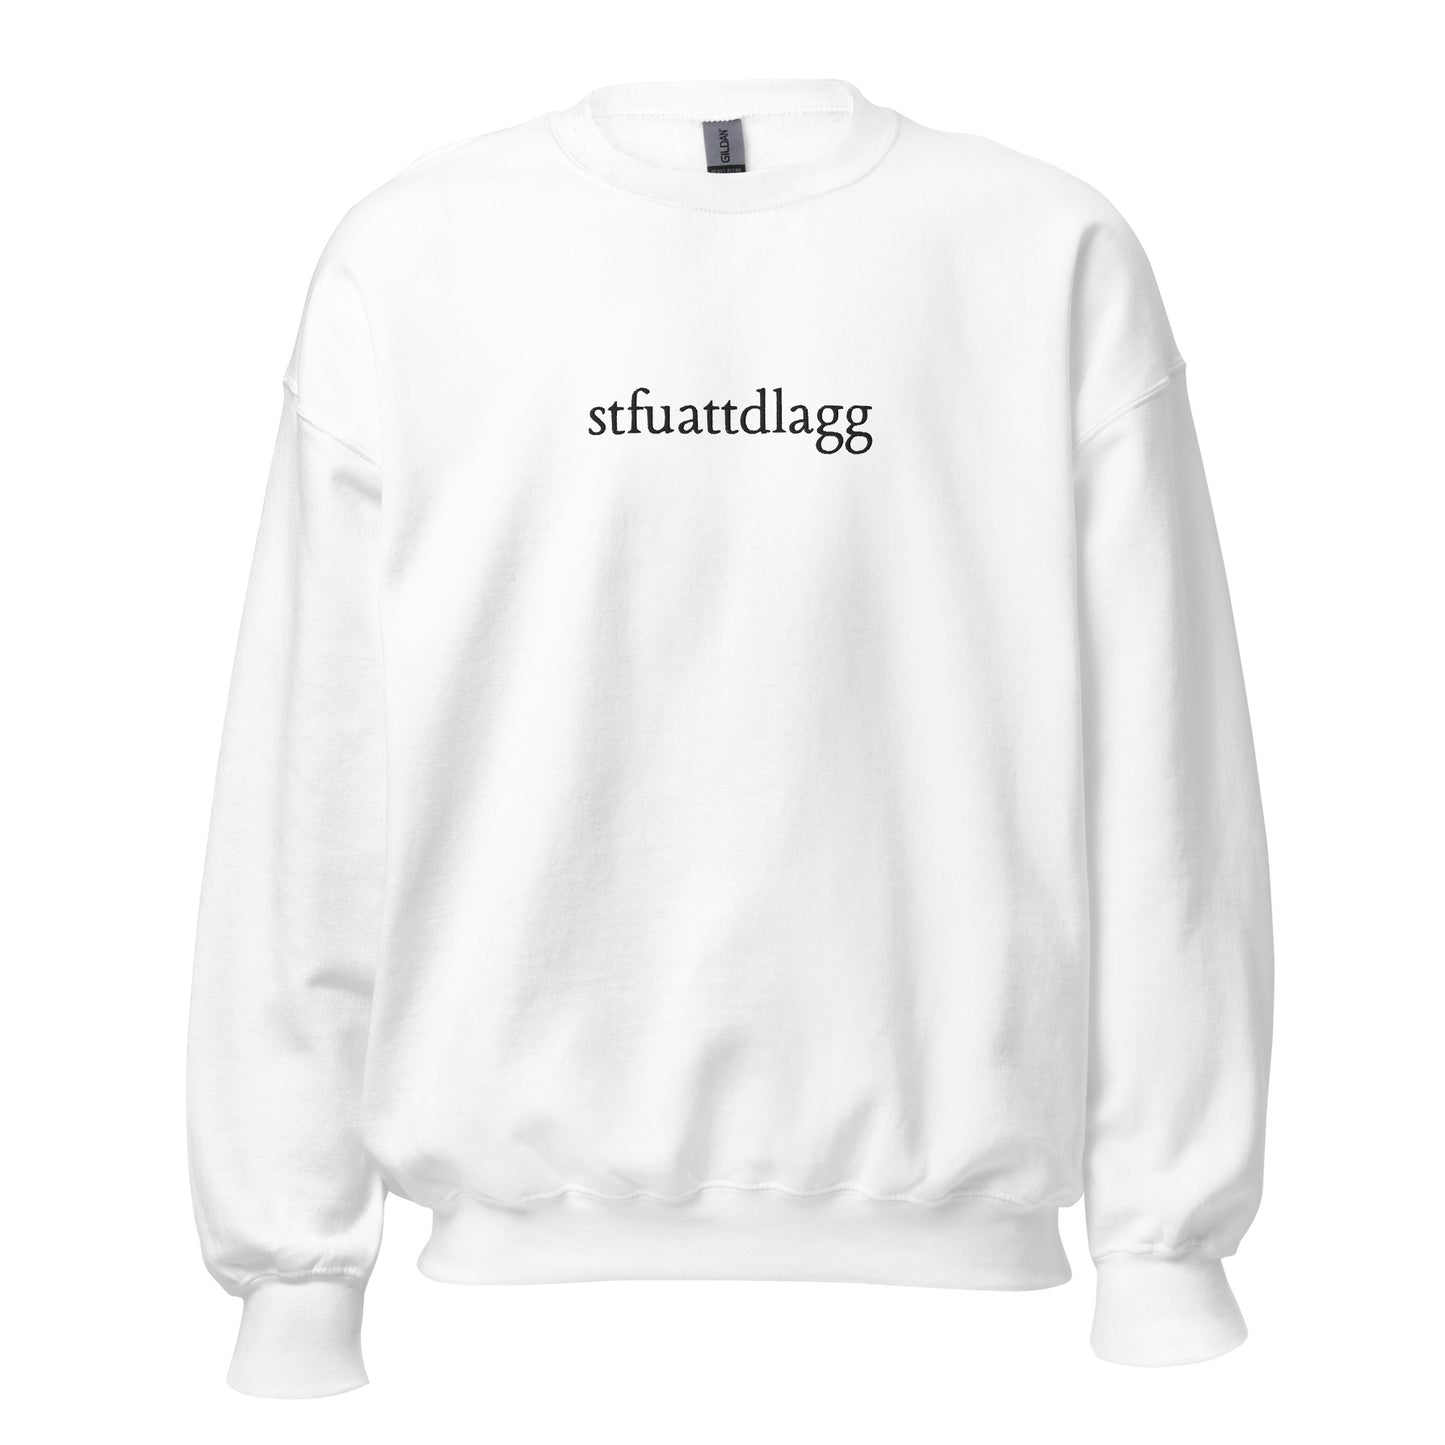 STFUATTDLAGG embroidered sweatshirt